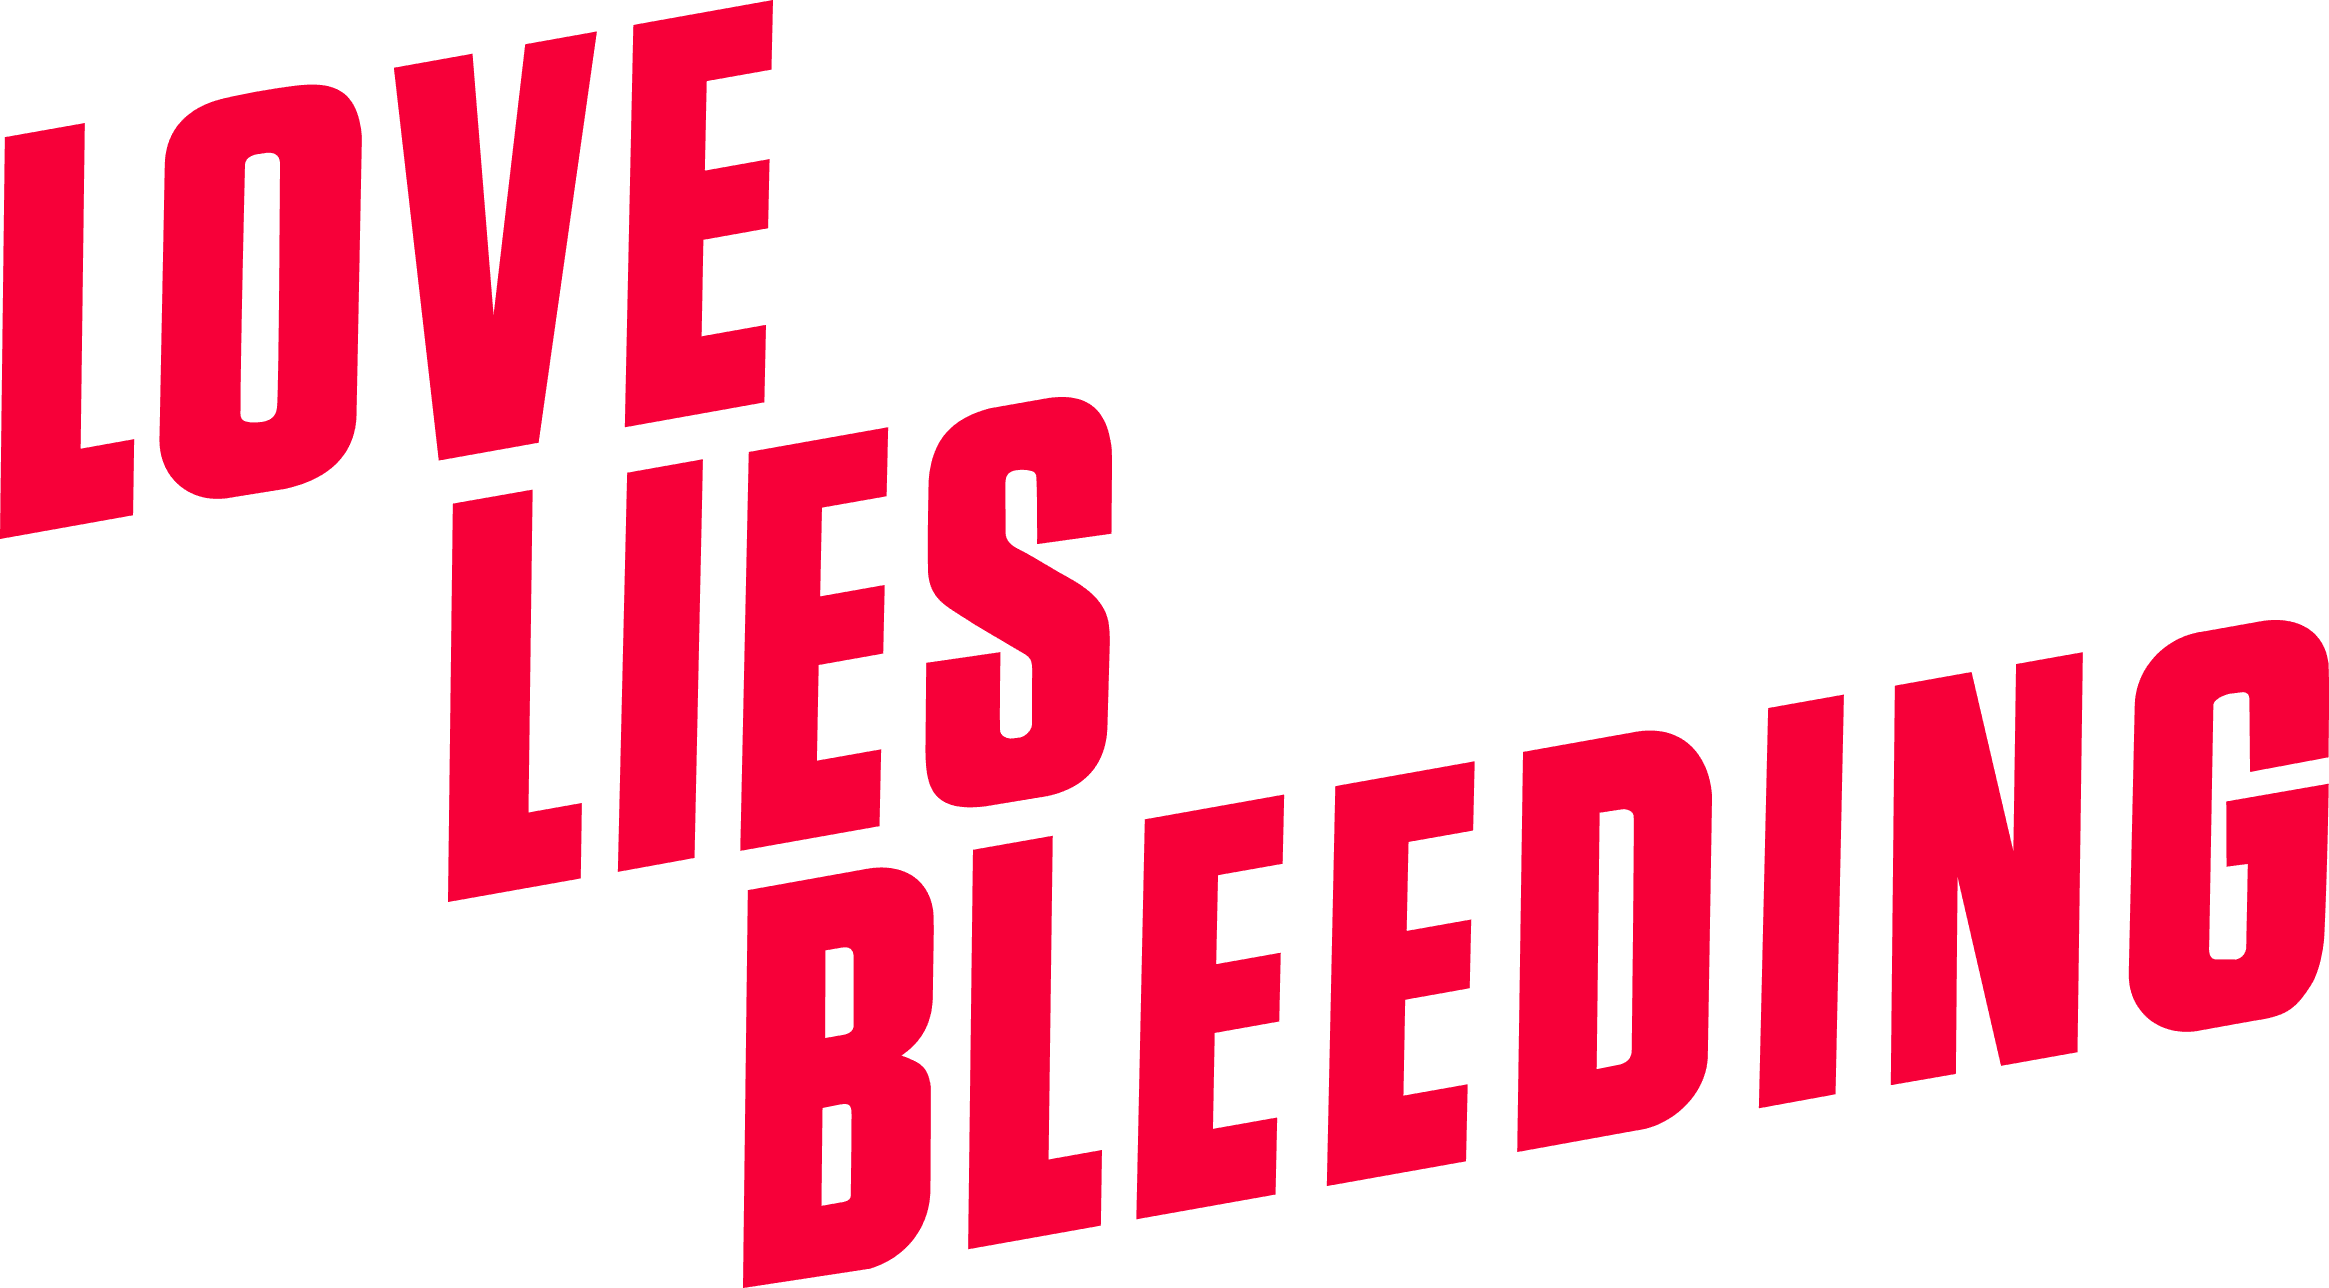 Love Lies Bleeding logo